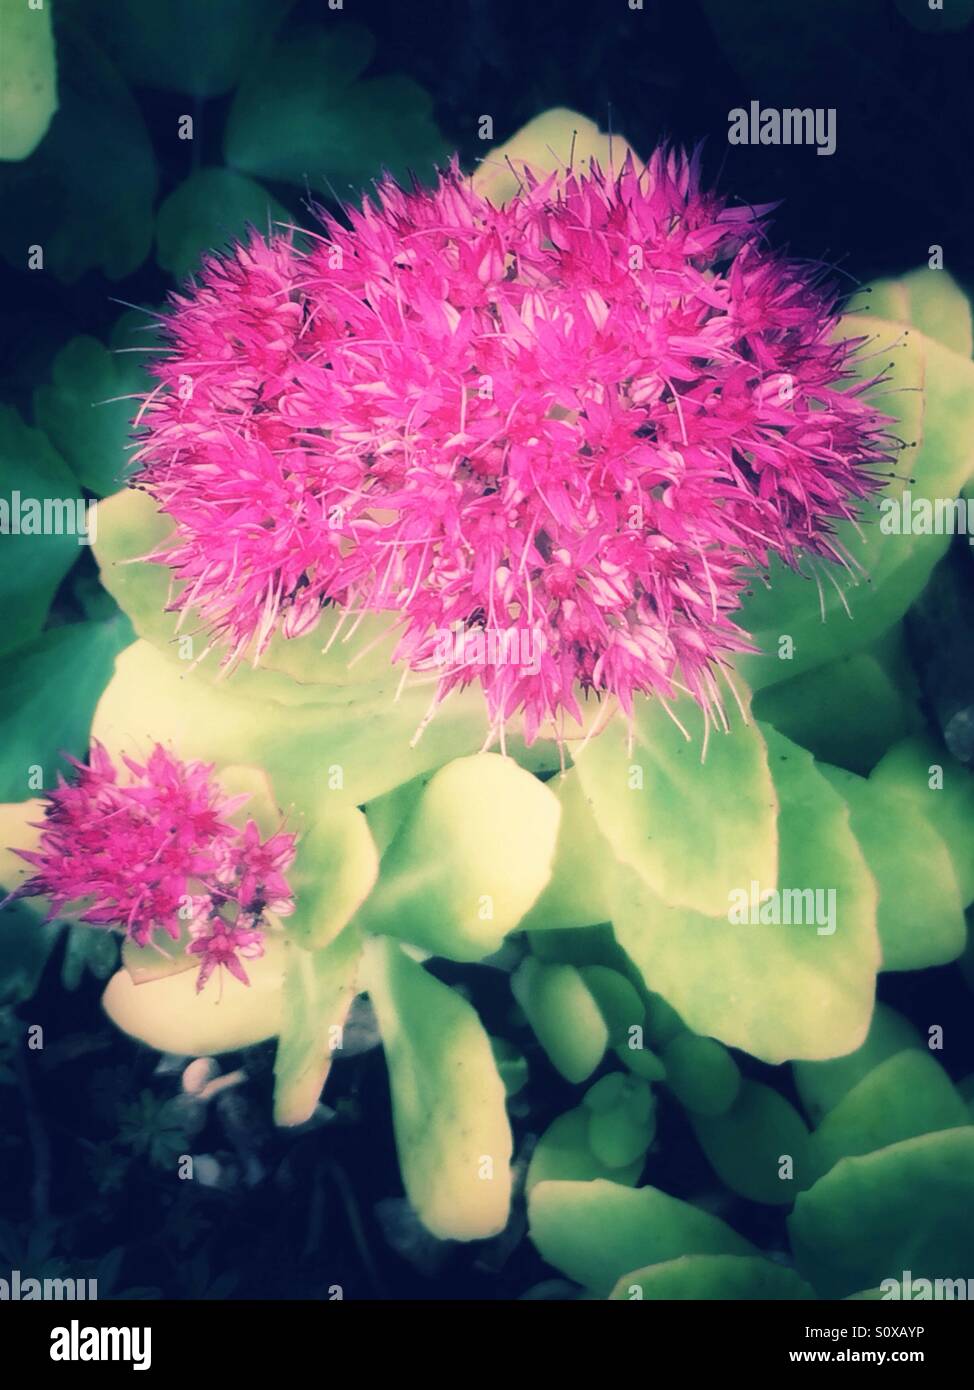 Pink flowers sedum plant Stock Photo